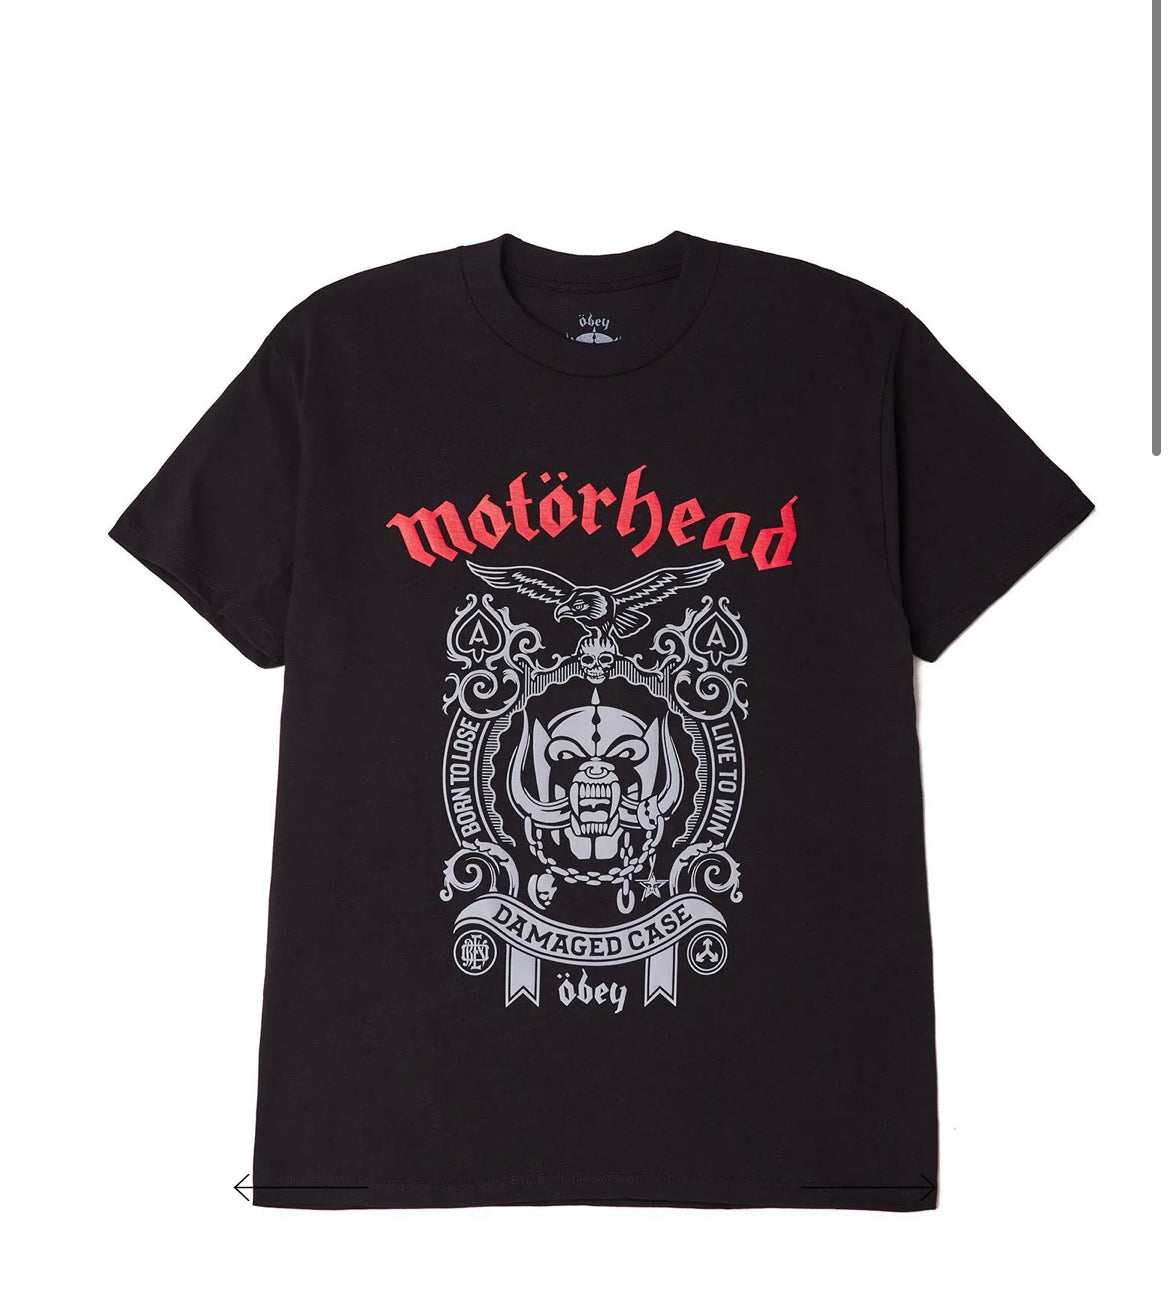 Obey - Motörhead Damaged Case Shirt